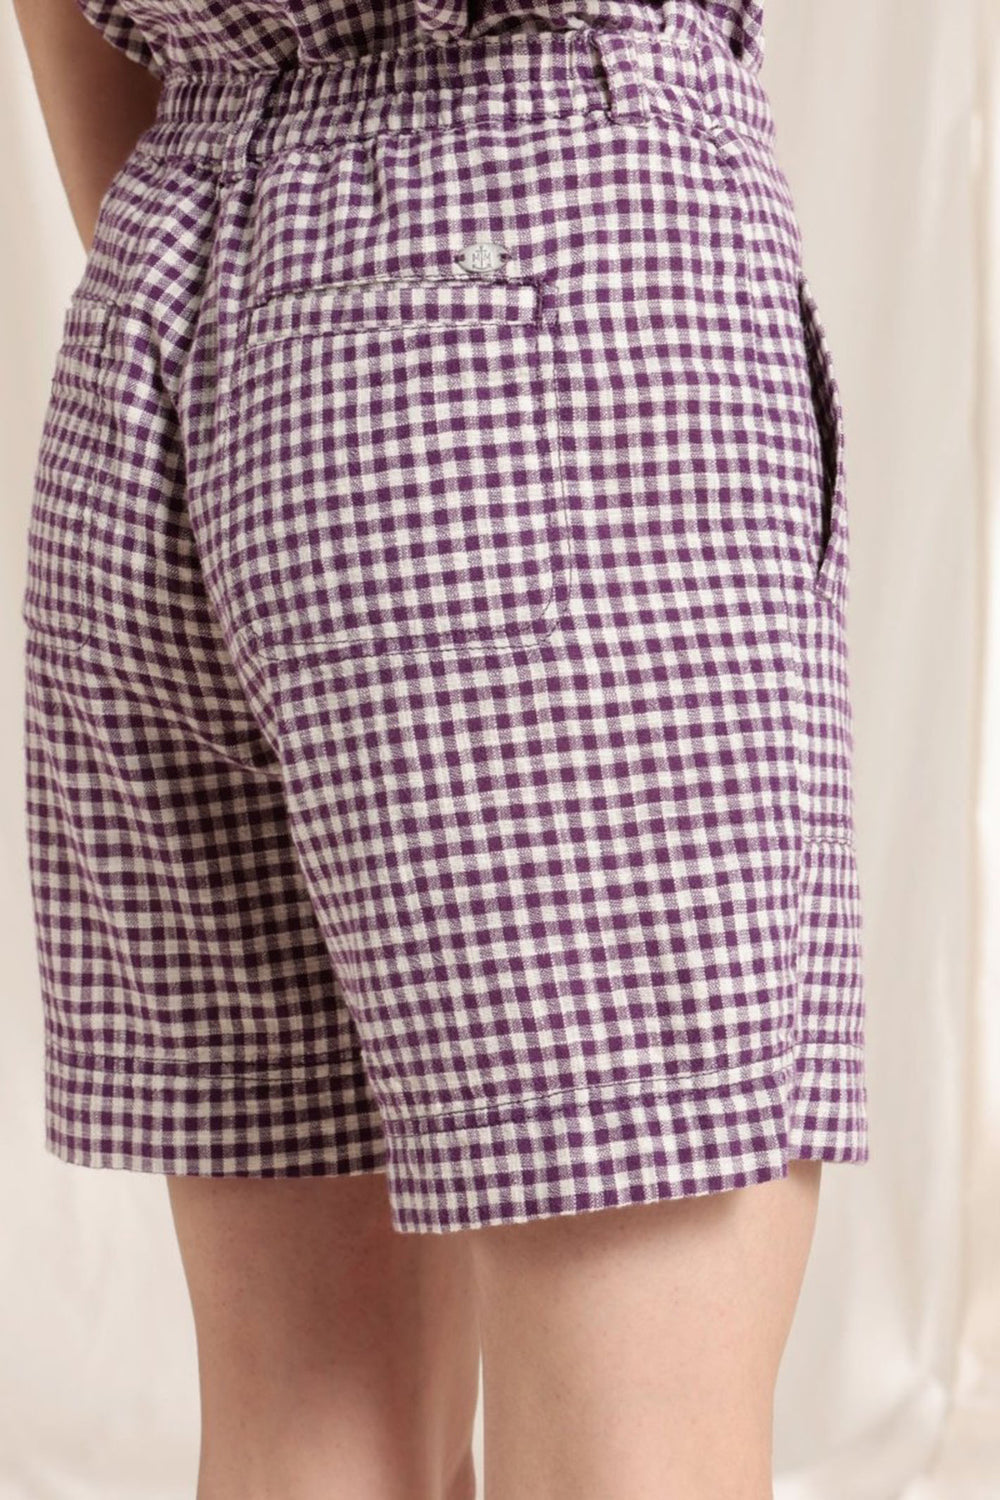 Mat De Misaine Balino-22567 C386 Purple Cassis Gingham Cotton Shorts - Shirley Allum Boutique